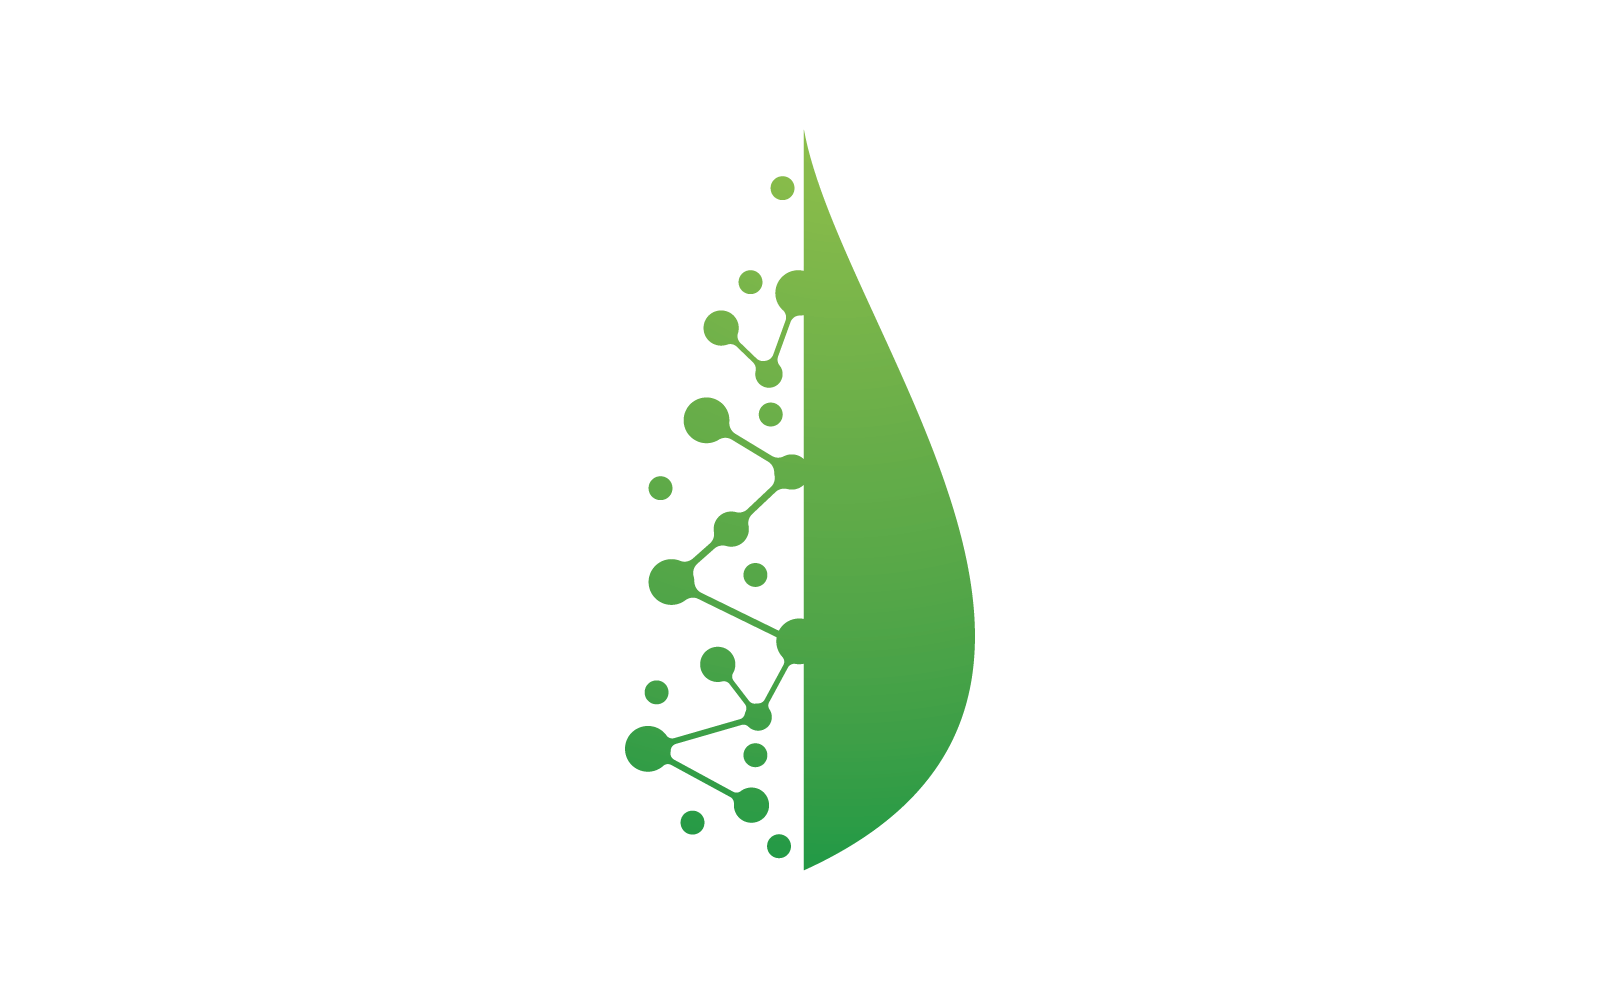 Bio tech leaf and molecule logo flat design vector